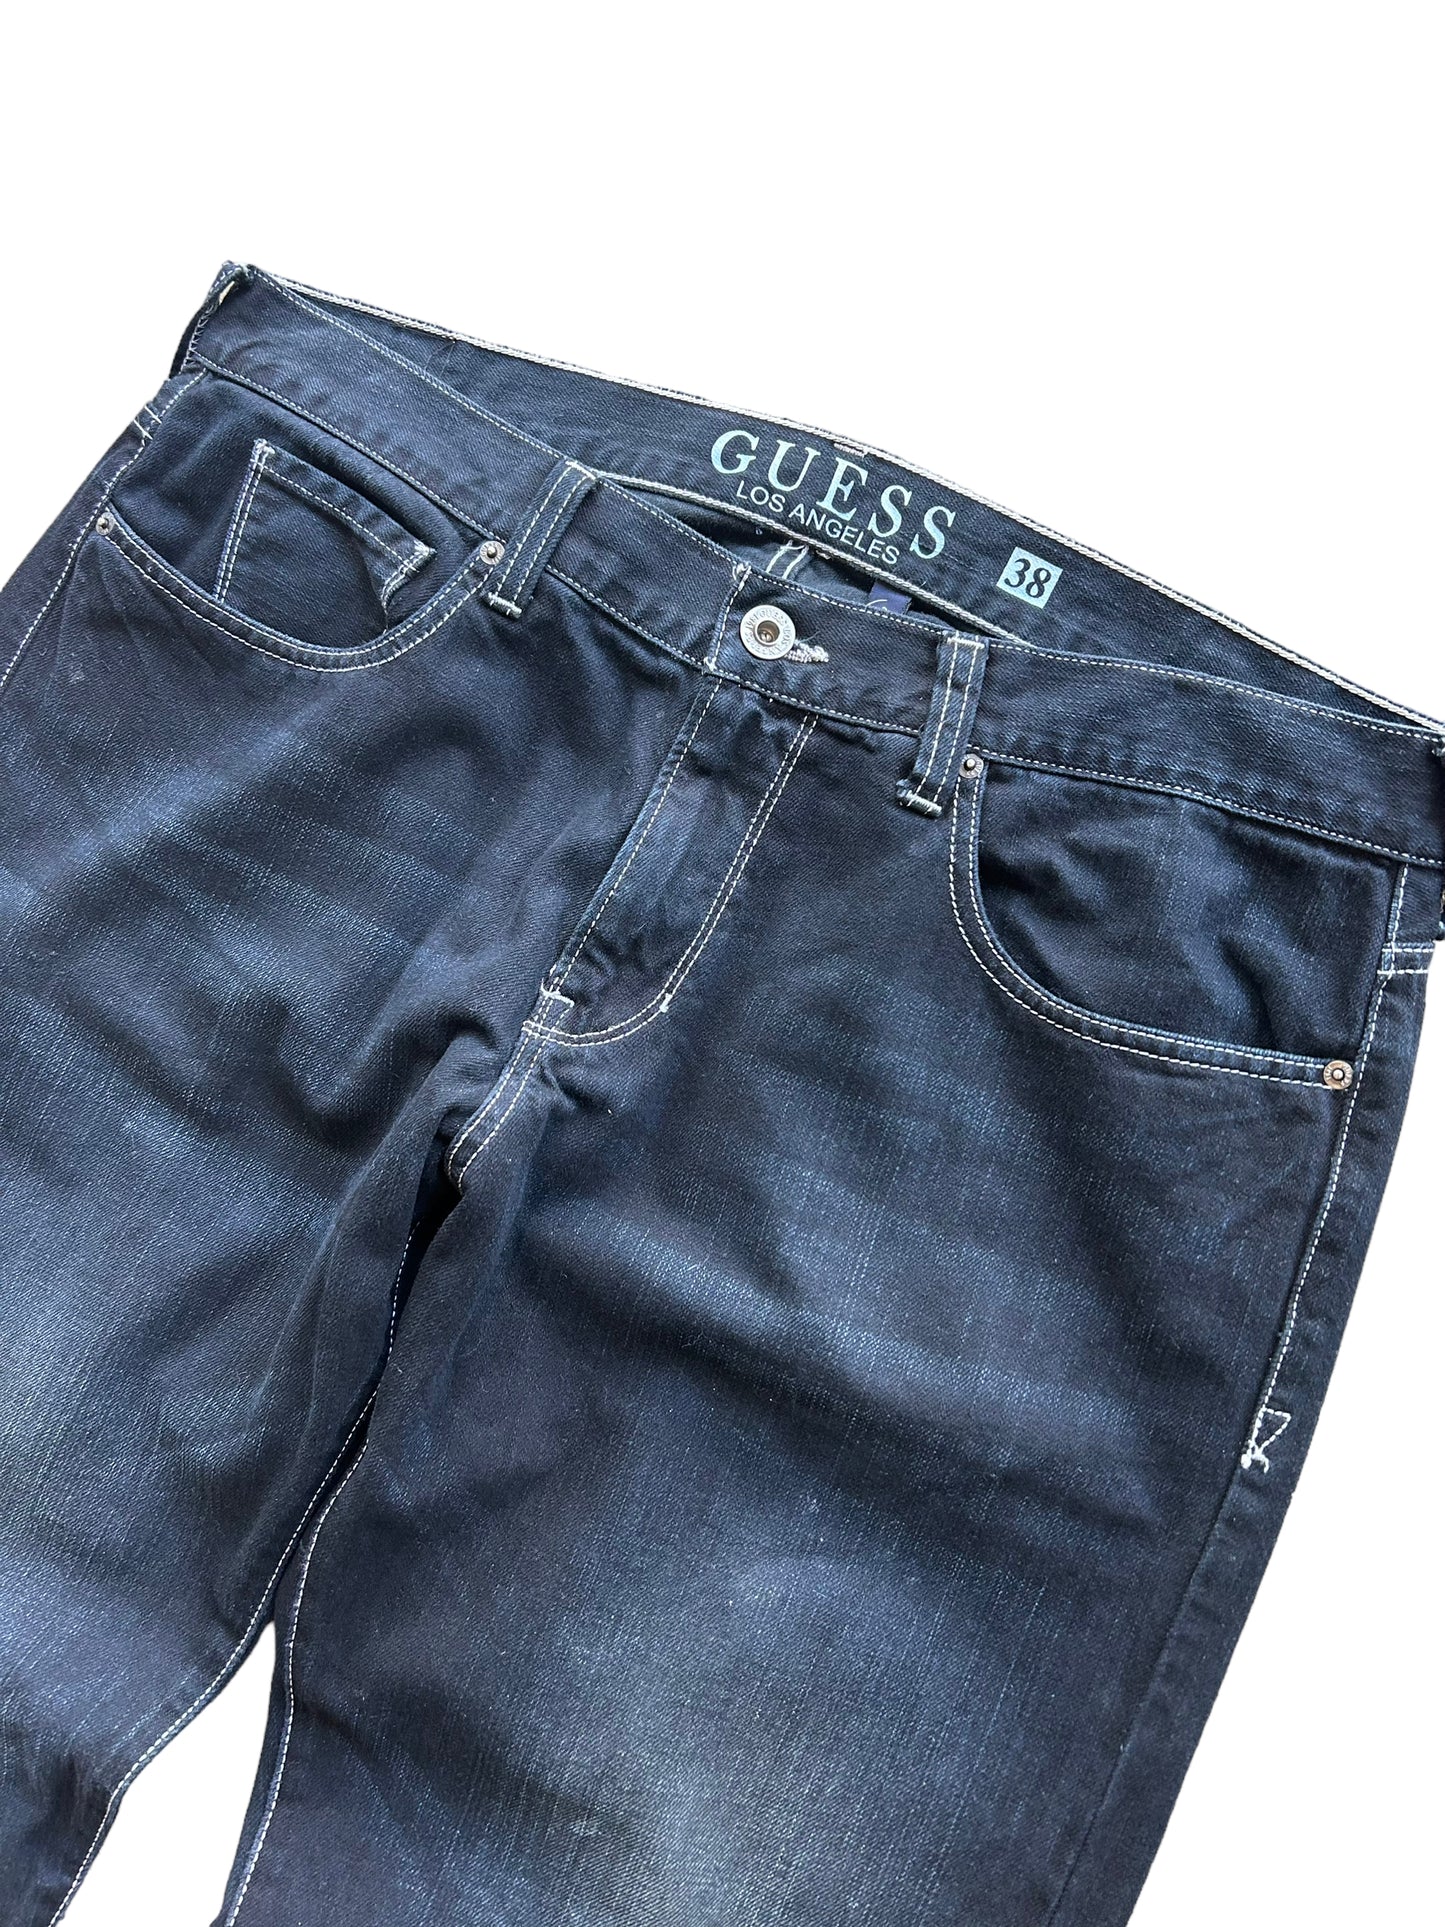 Guess Denim Jeans